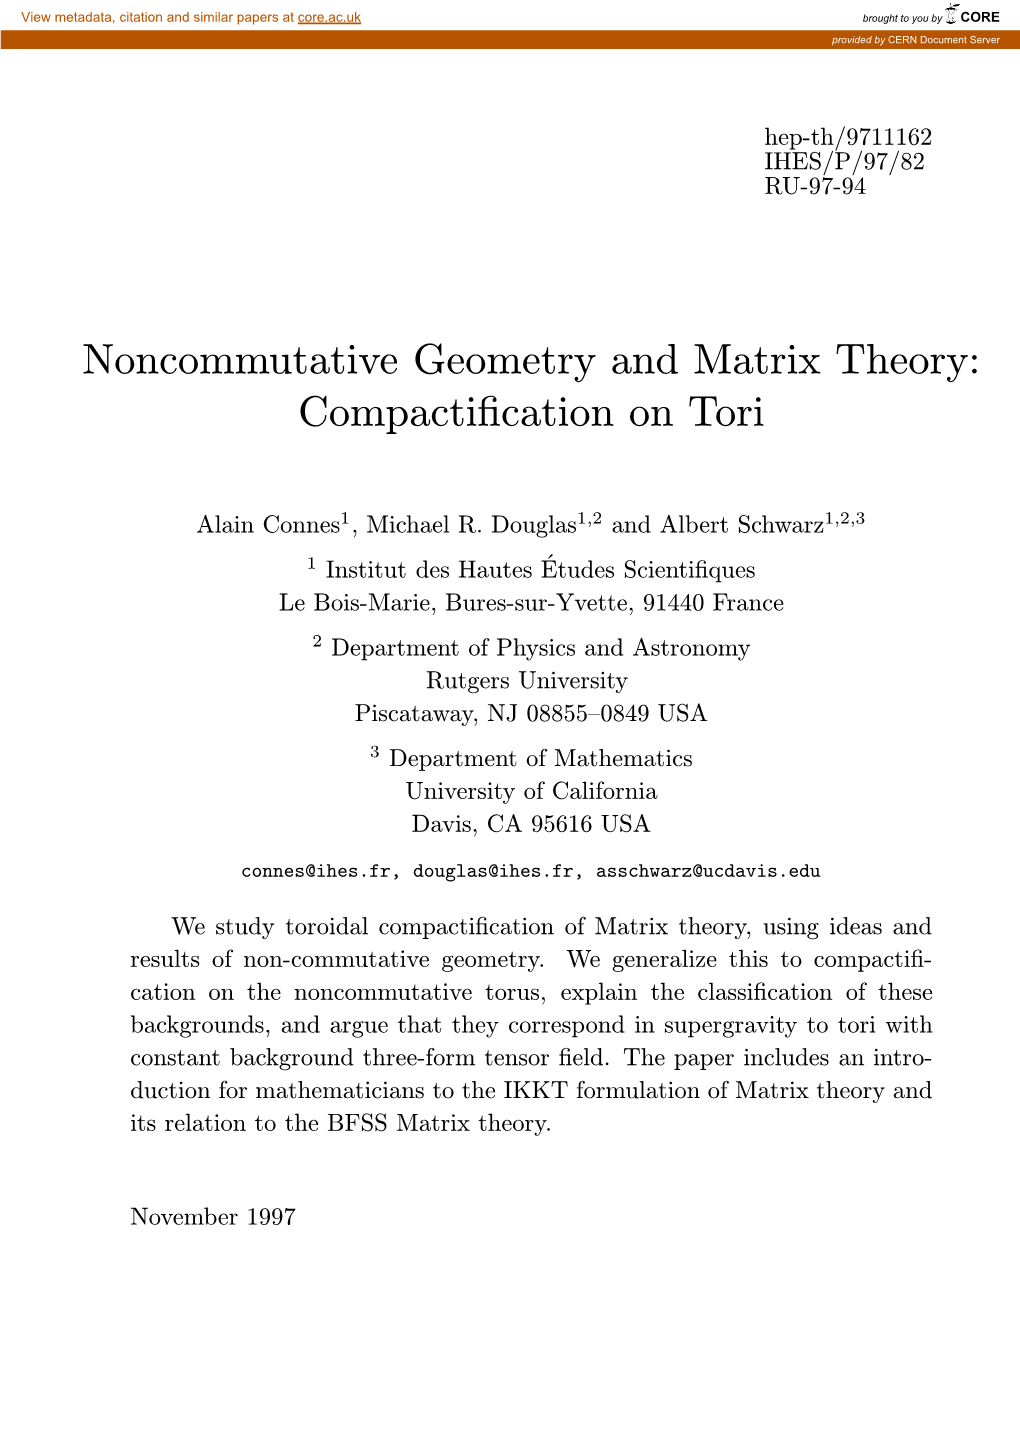 Noncommutative Geometry and Matrix Theory: Compactification on Tori